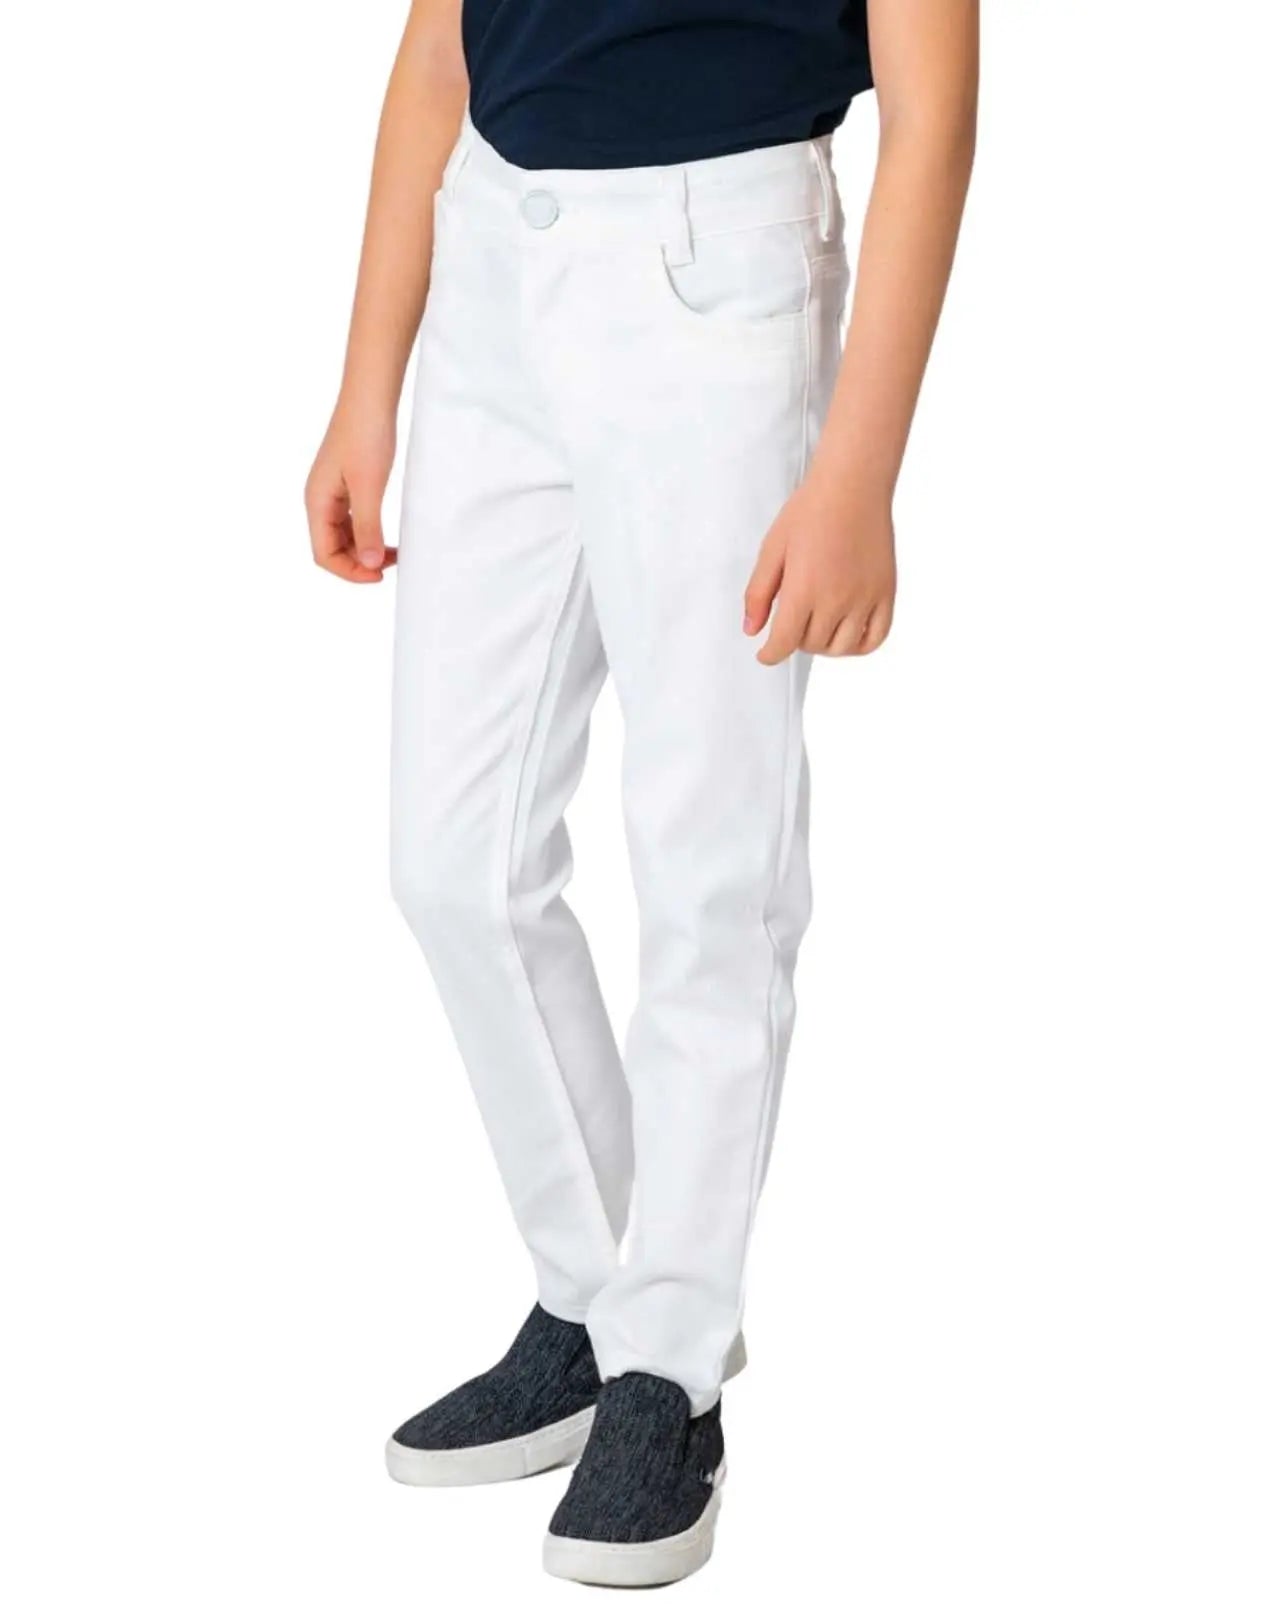 InCity Boys Tween 7-14 Years Regular Fit Cotton White Purga Pants InCity Boys Girls